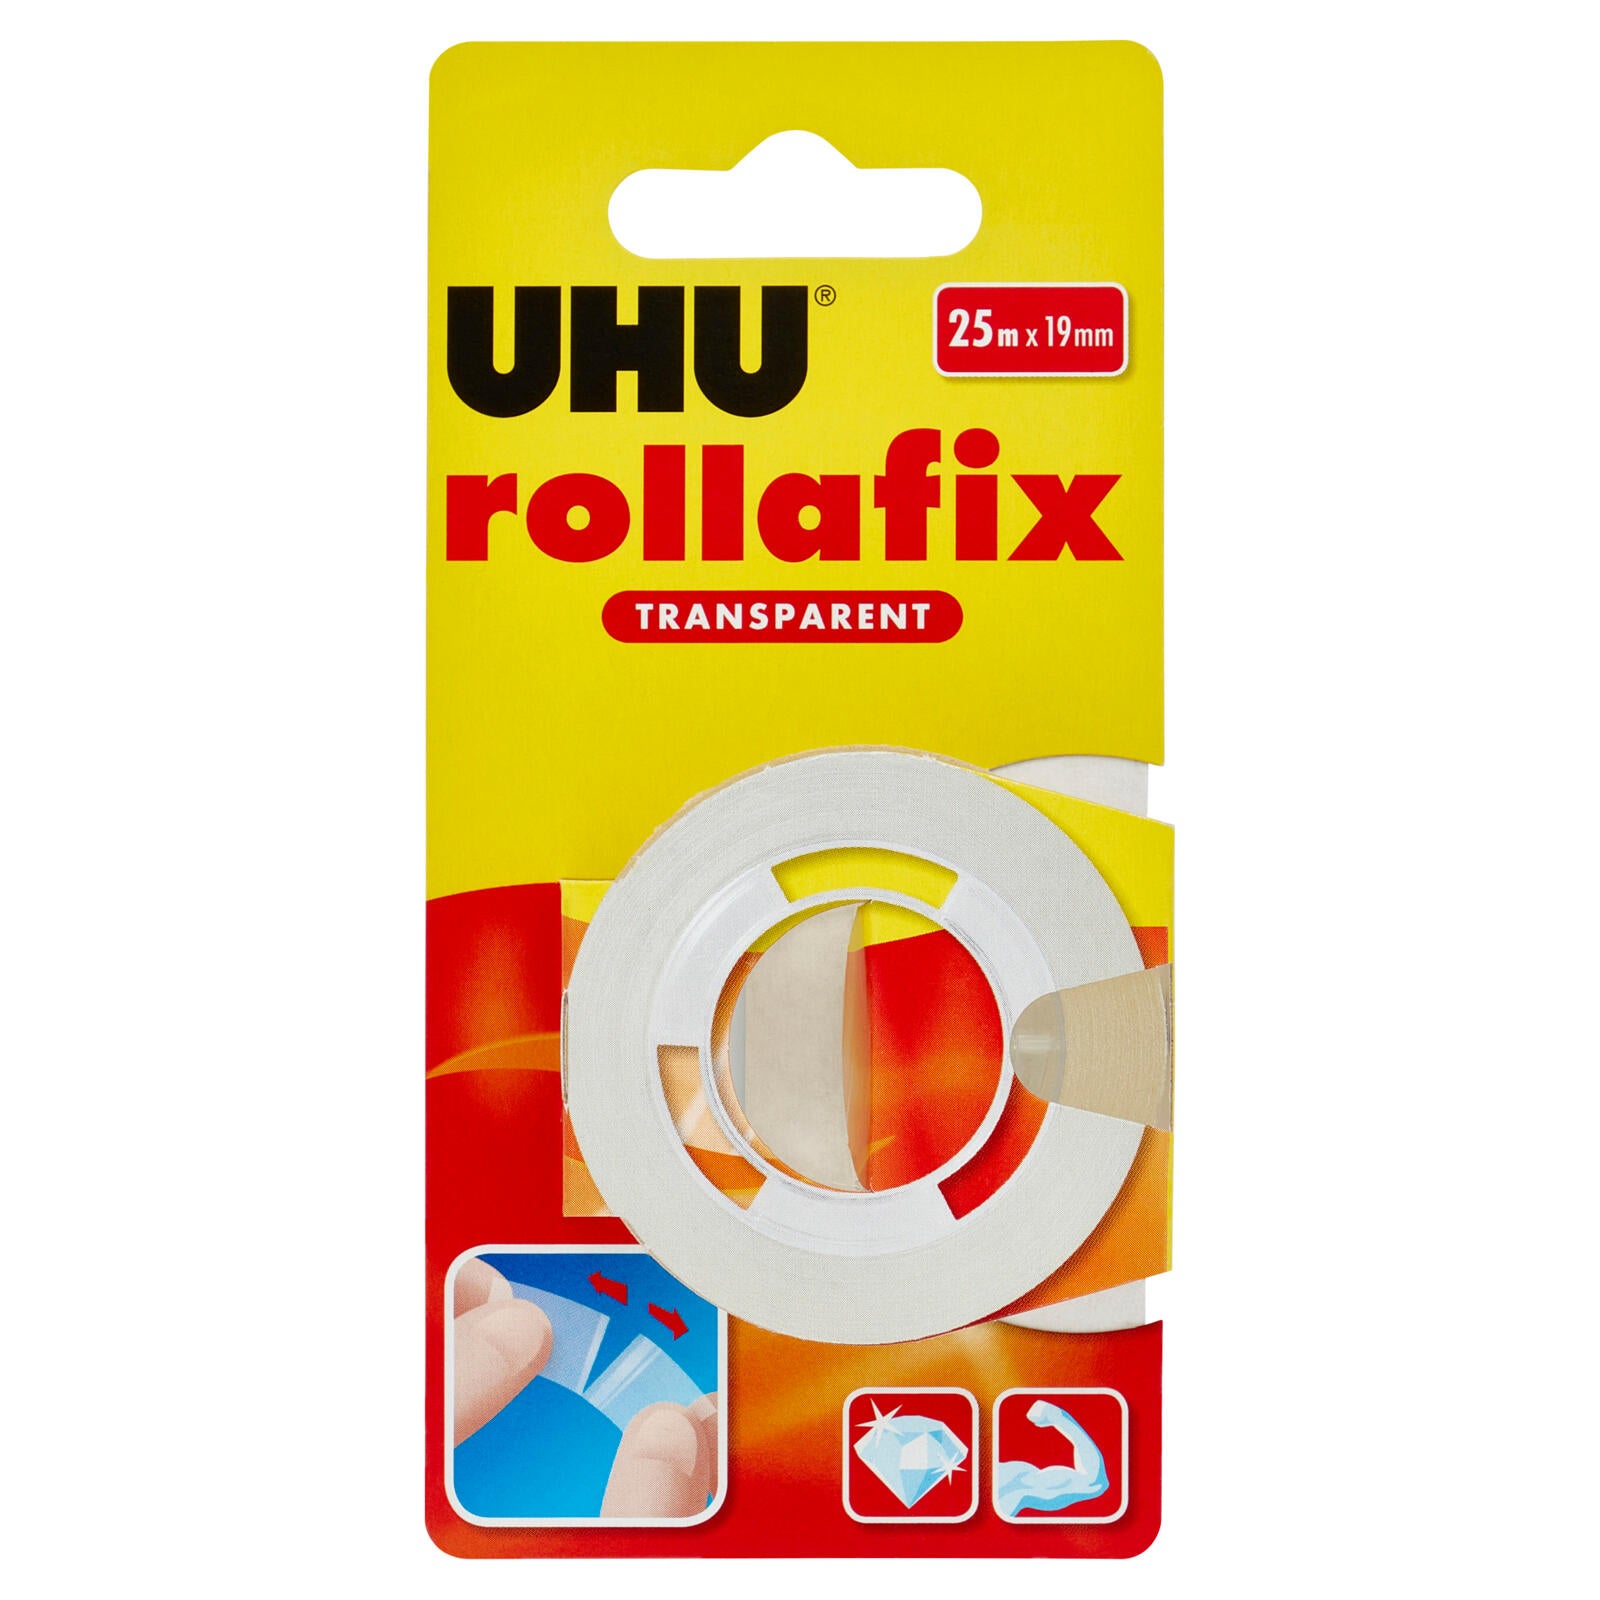 UHU Rollafix Transparent 25m x 19mm